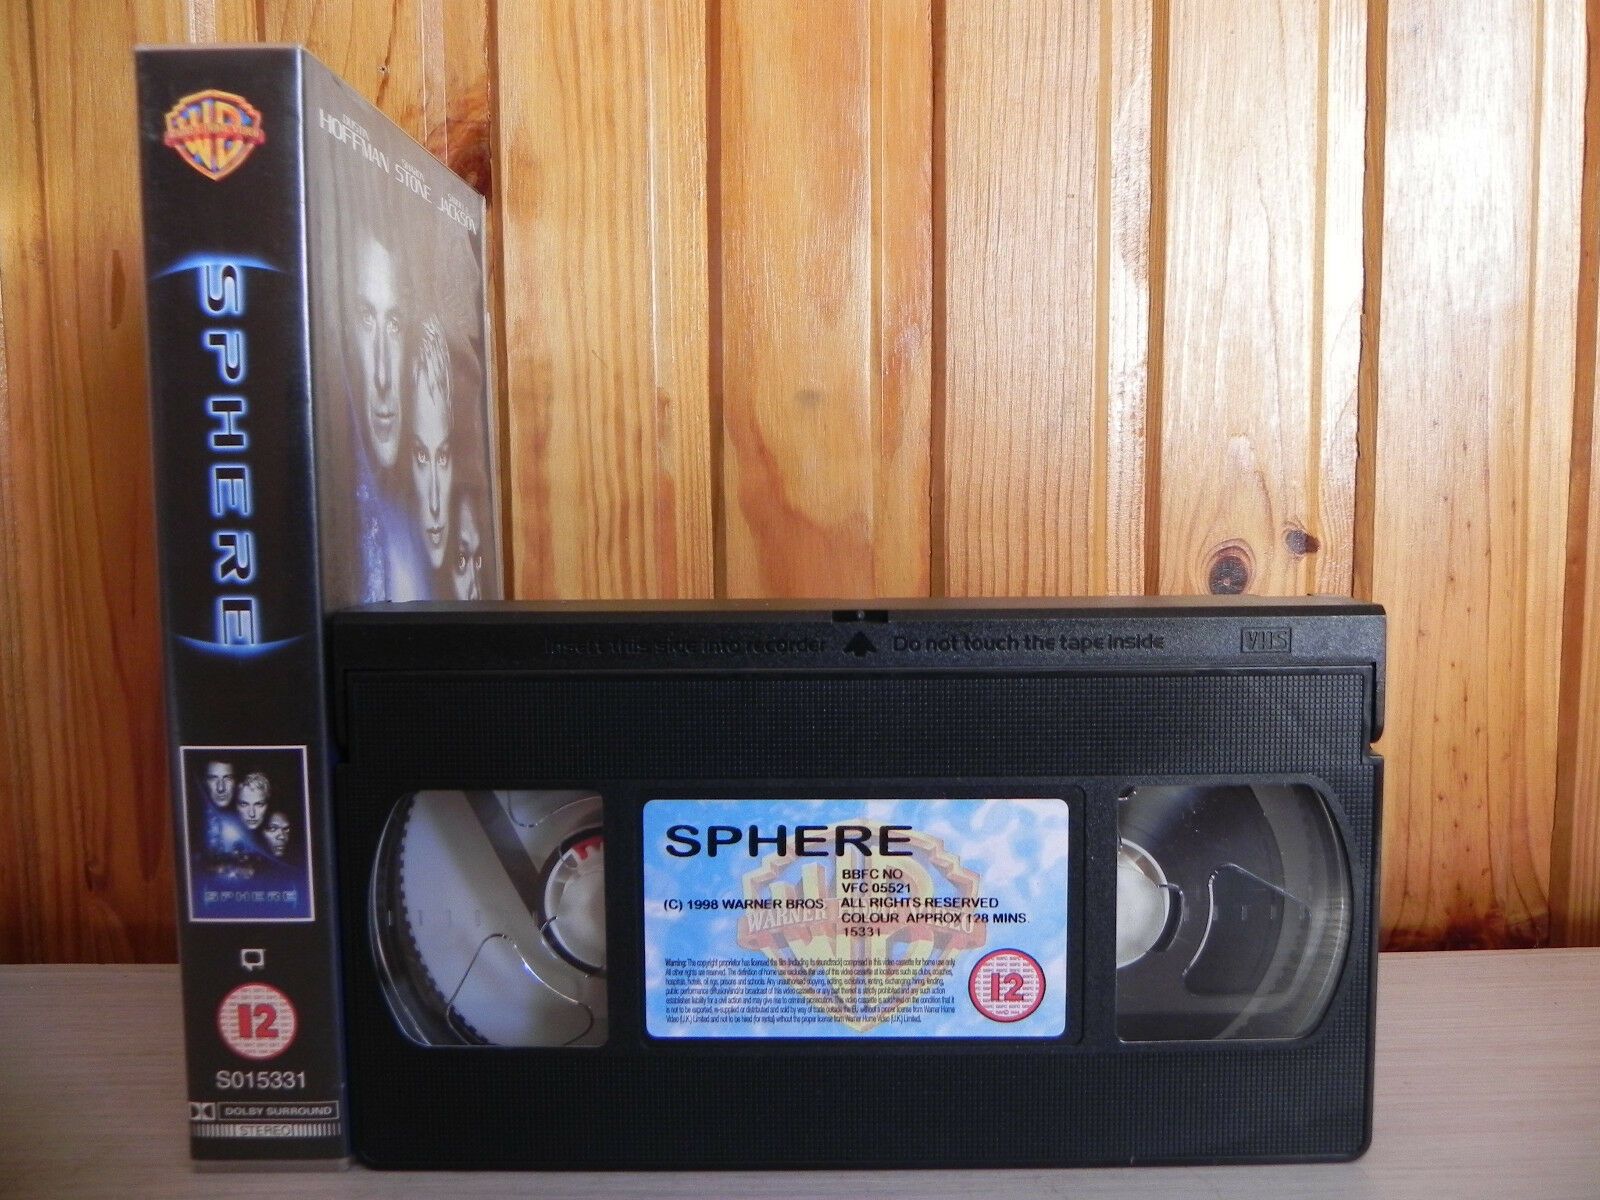 Sphere - Hoffman - Stone - Jackson - Under The Ocean Sci-Fi - Pal Video - VHS-